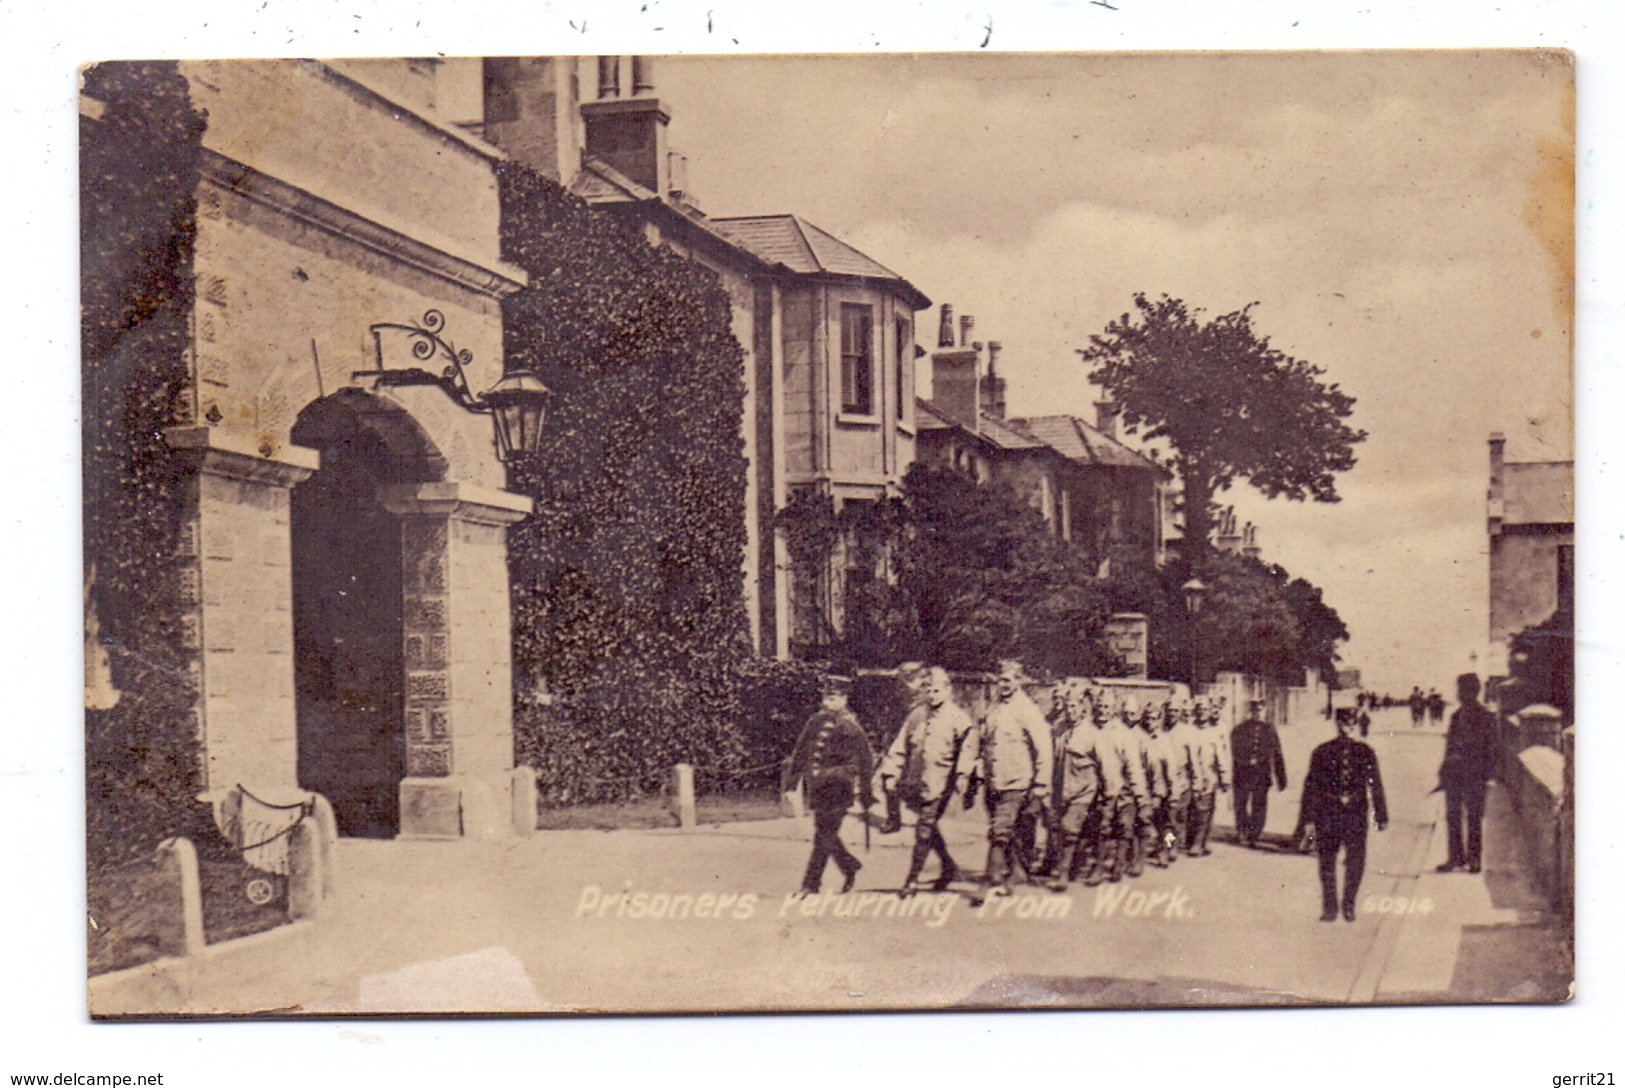 JUSTIZ / GEFANGENE, Prisoners Returning From Work, 1913, England - Prison